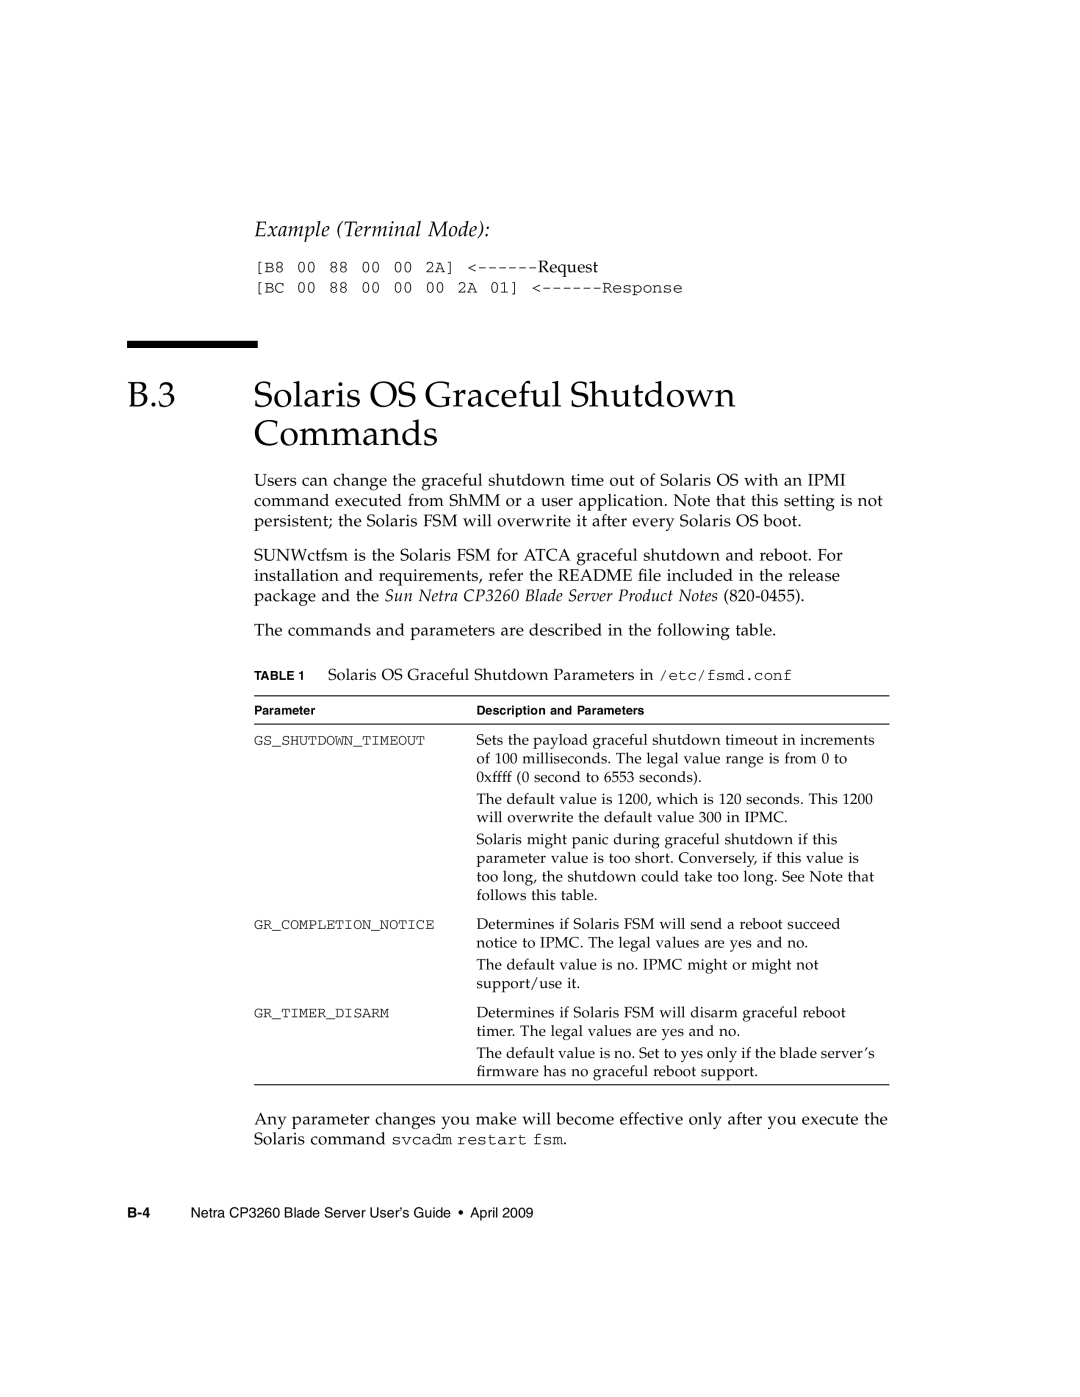 Sun Microsystems CP3260 manual B.3 Solaris OS Graceful Shutdown Commands, Example Terminal Mode 